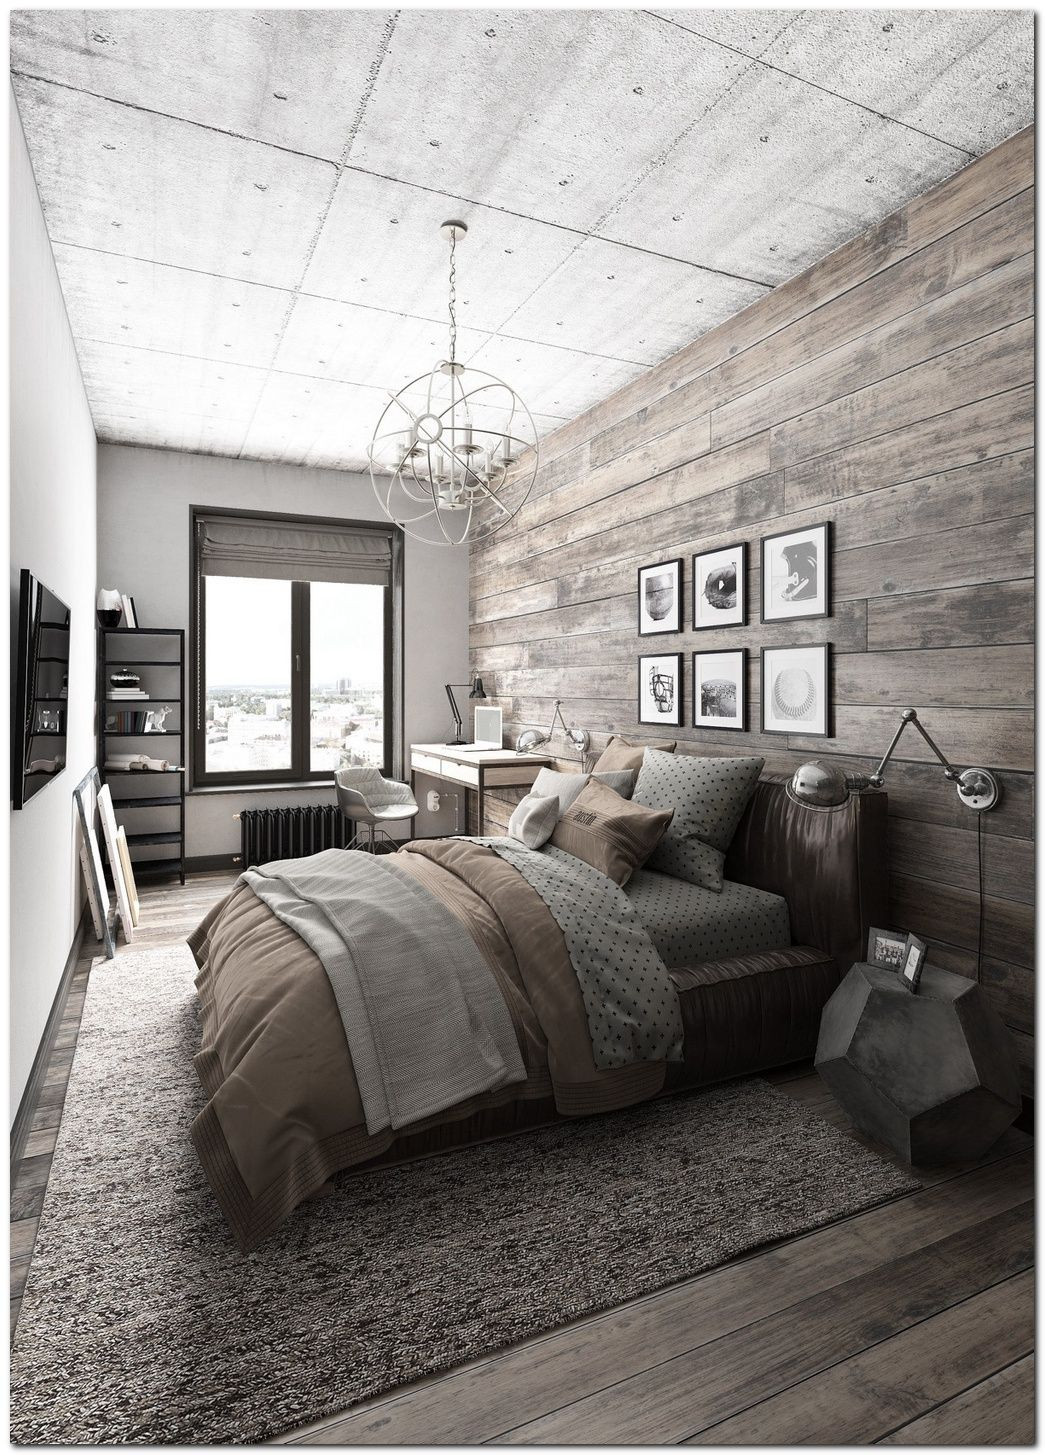 Rustic Industrial Bedroom
 70 Ideas for Industrial Bedroom Interior